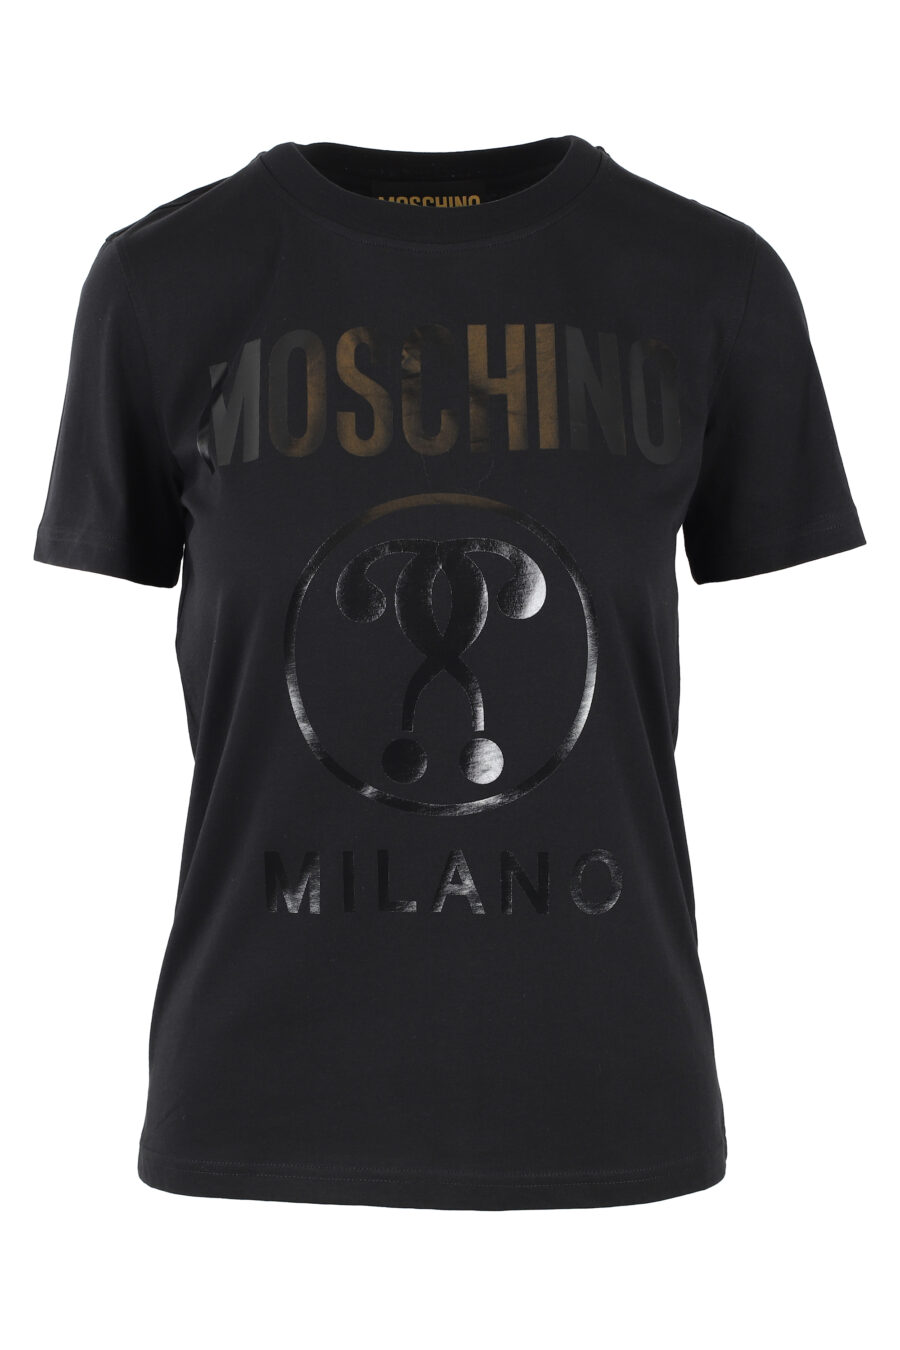 T-shirt noir avec logo monochrome - IMG 5041